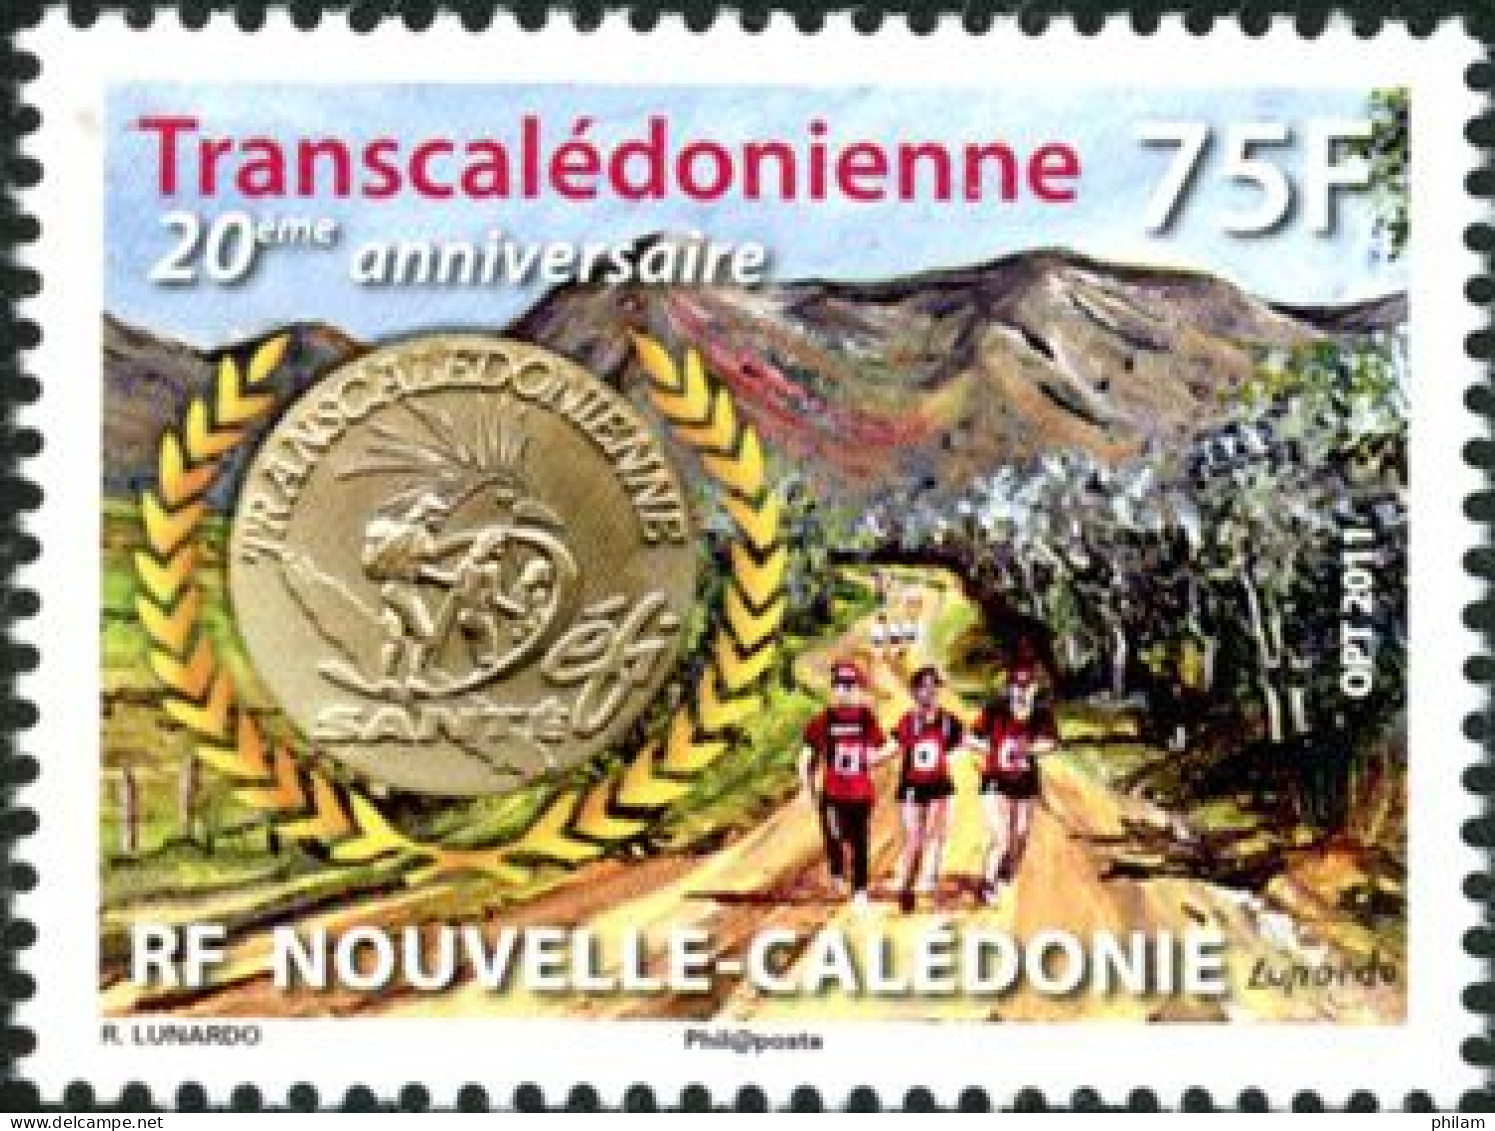 NOUVELLE CALEDONIE 2011 - Transcaledonienne - 1 V. - Nuevos